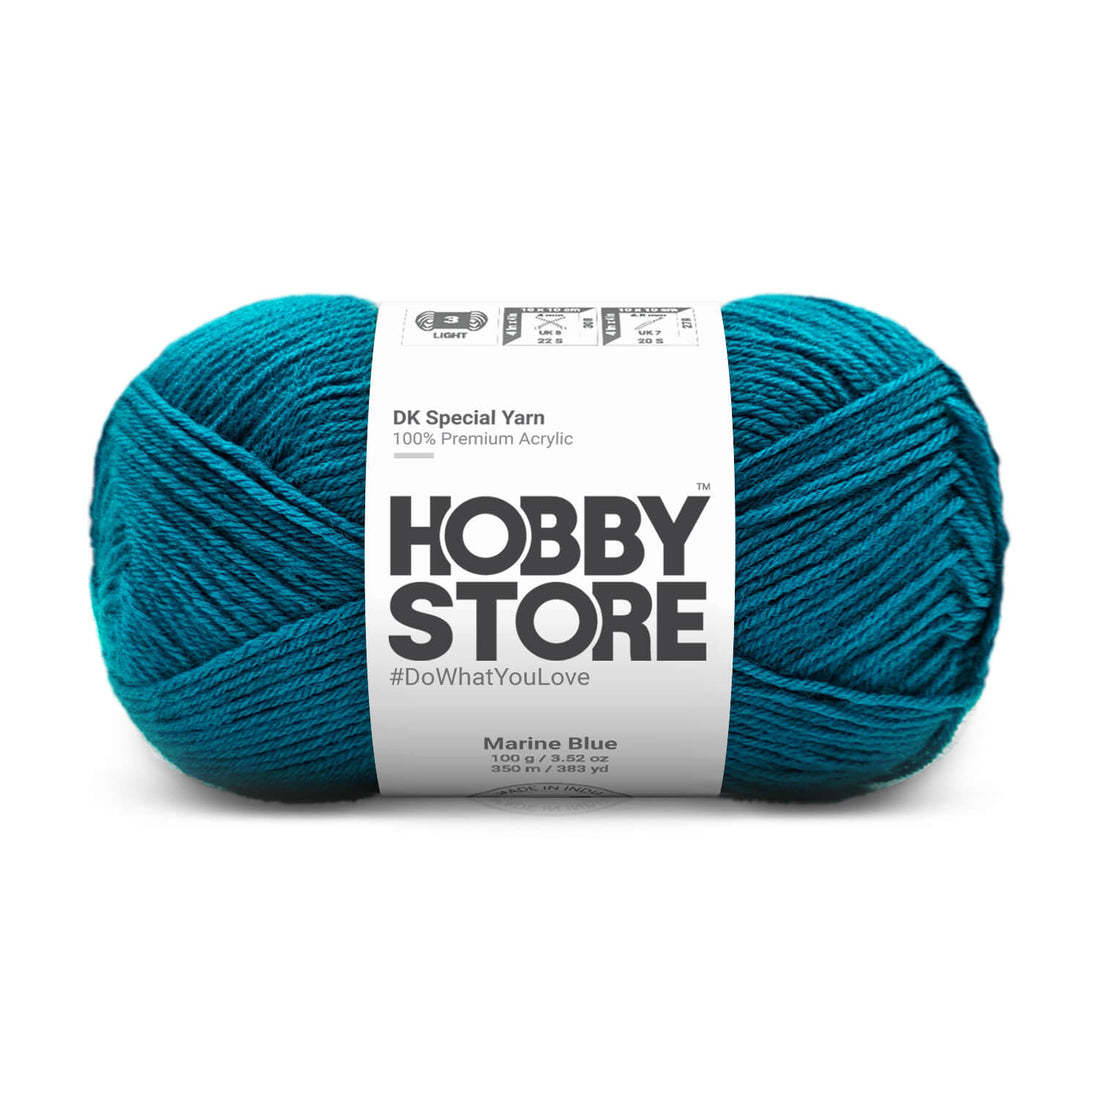 Hobby Store DK Special Yarn - Marine Blue 5033